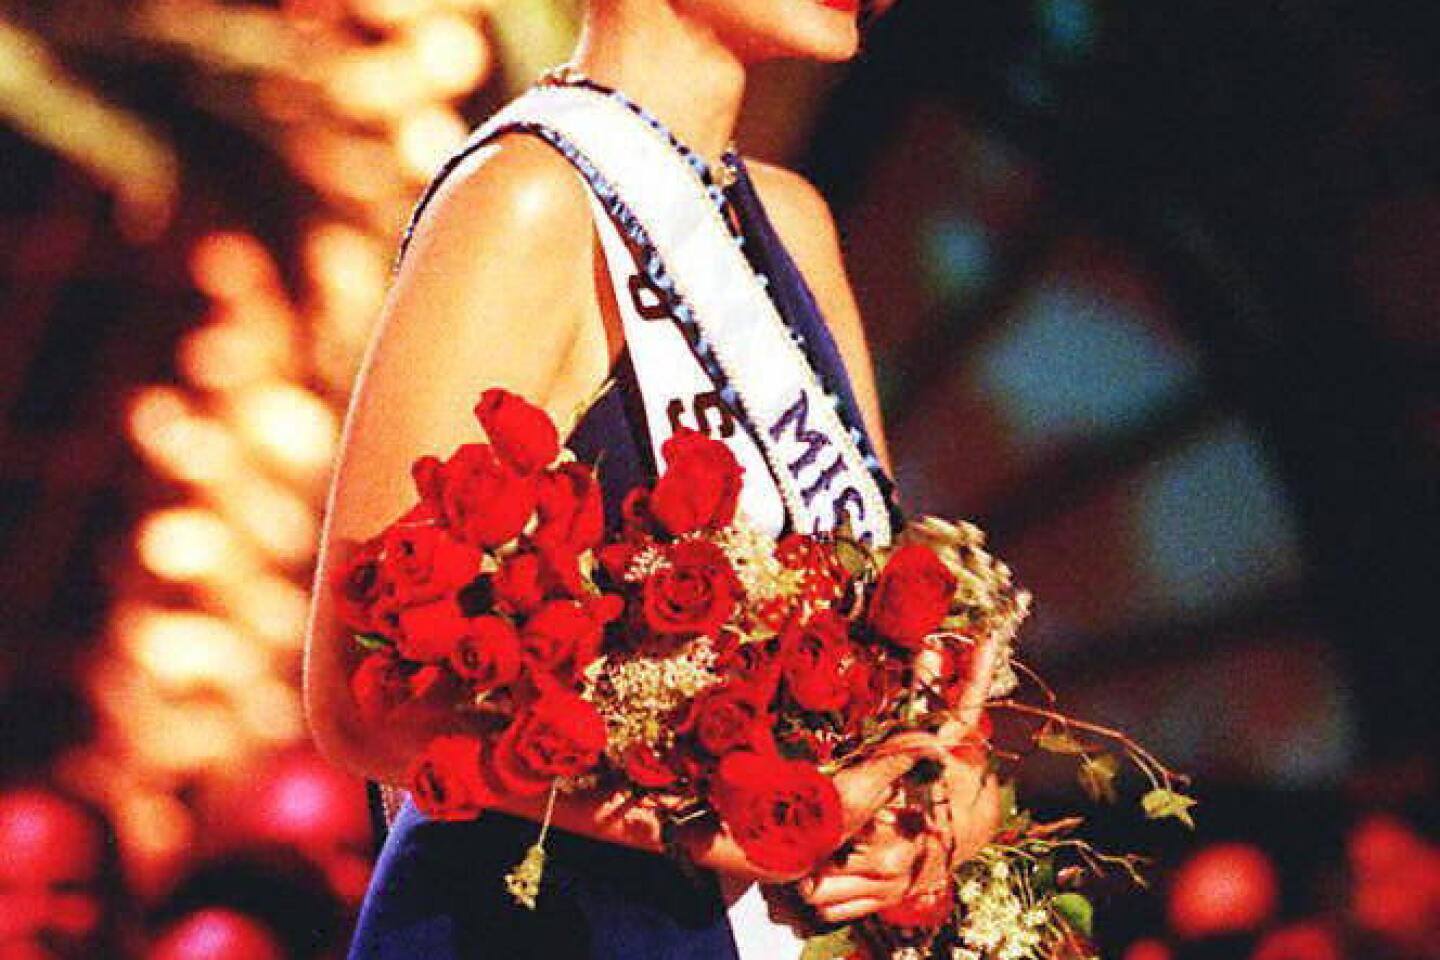 Miss Universo 1997